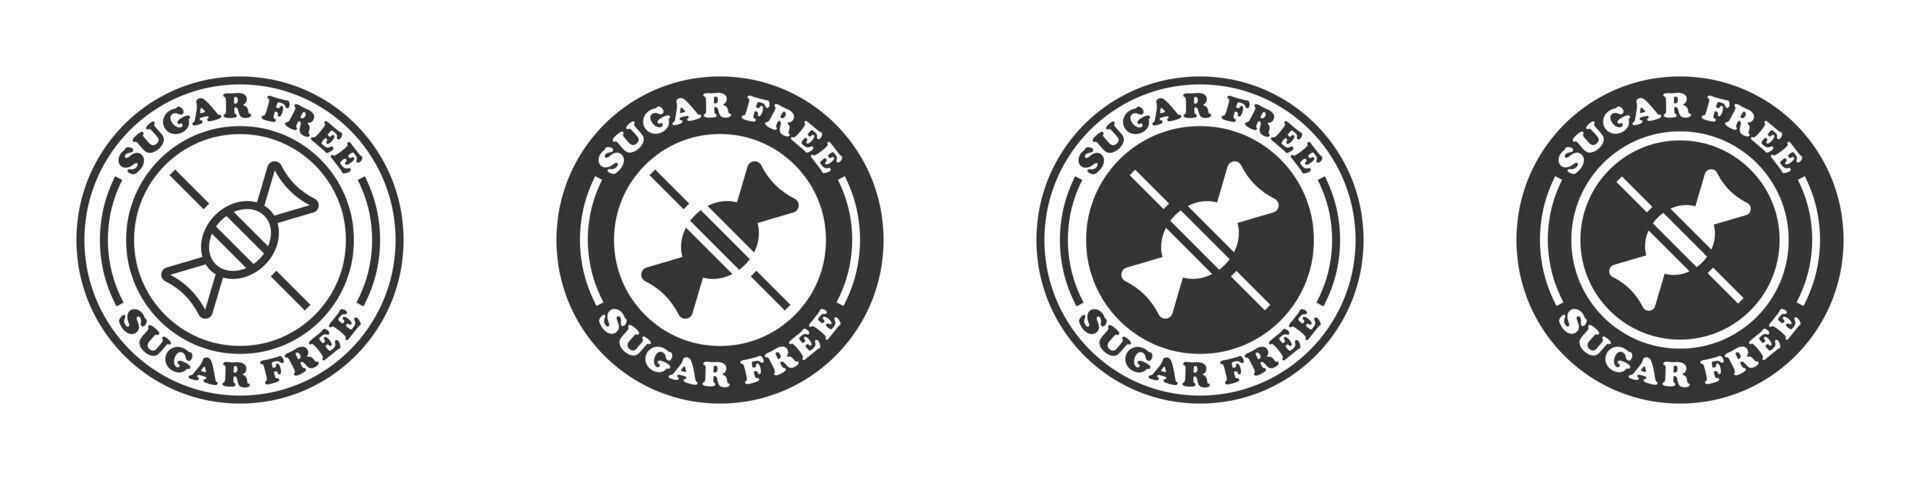 Sugar free candy icon. Vector illustration.